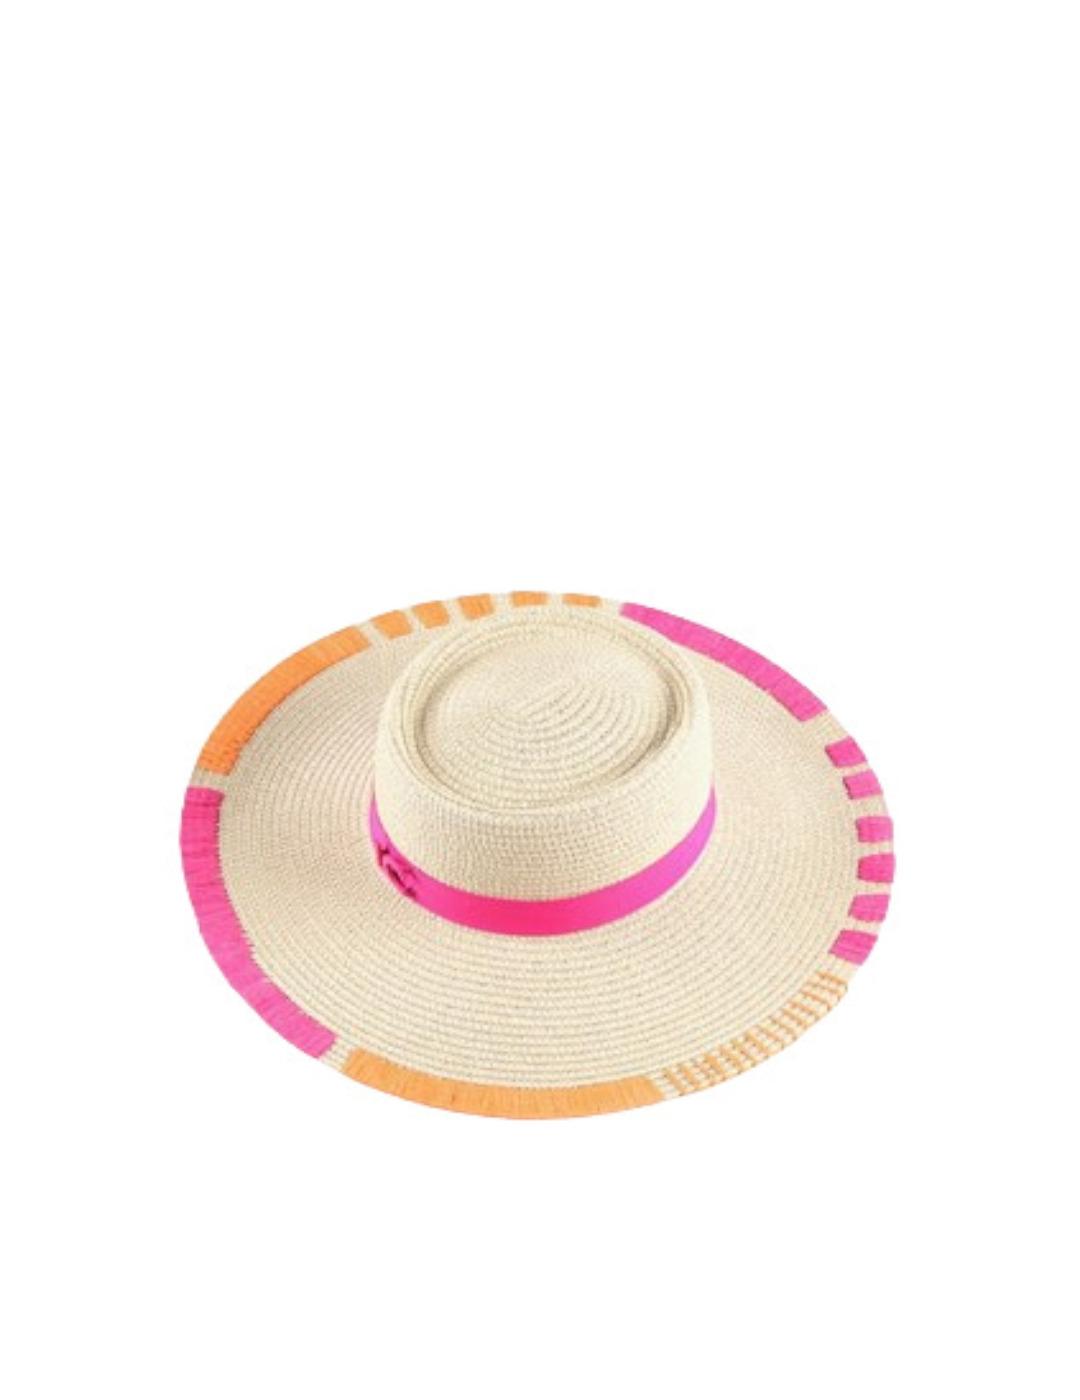 Sombrero LC con detalles de bordados en ala